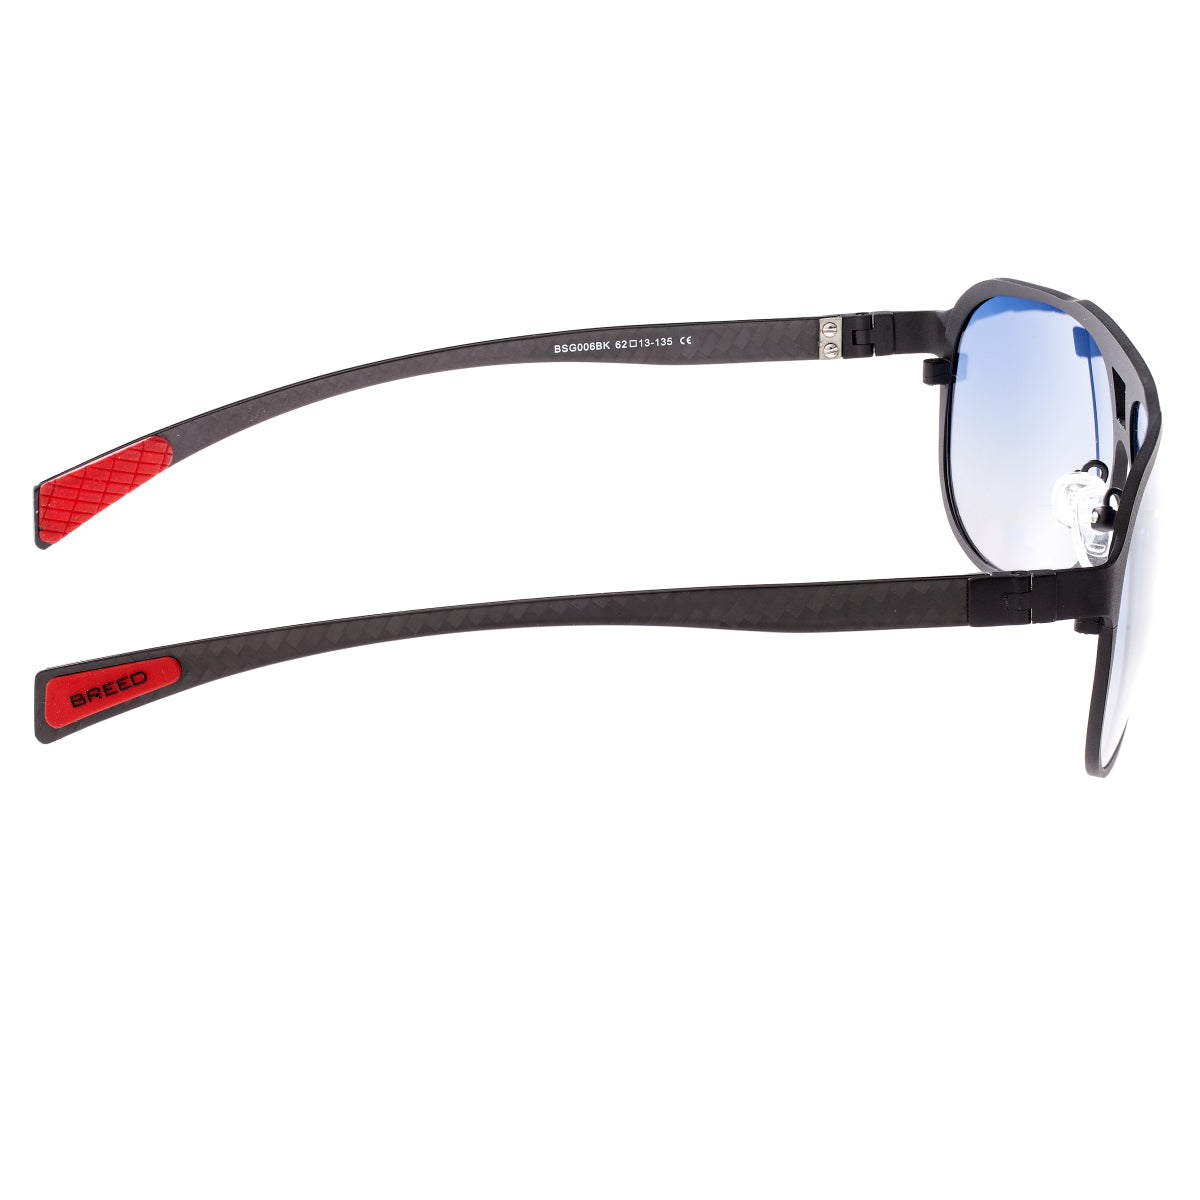 Breed Apollo Titanium and Carbon Fiber Polarized Sunglasses - Black/Blue - BSG006BK